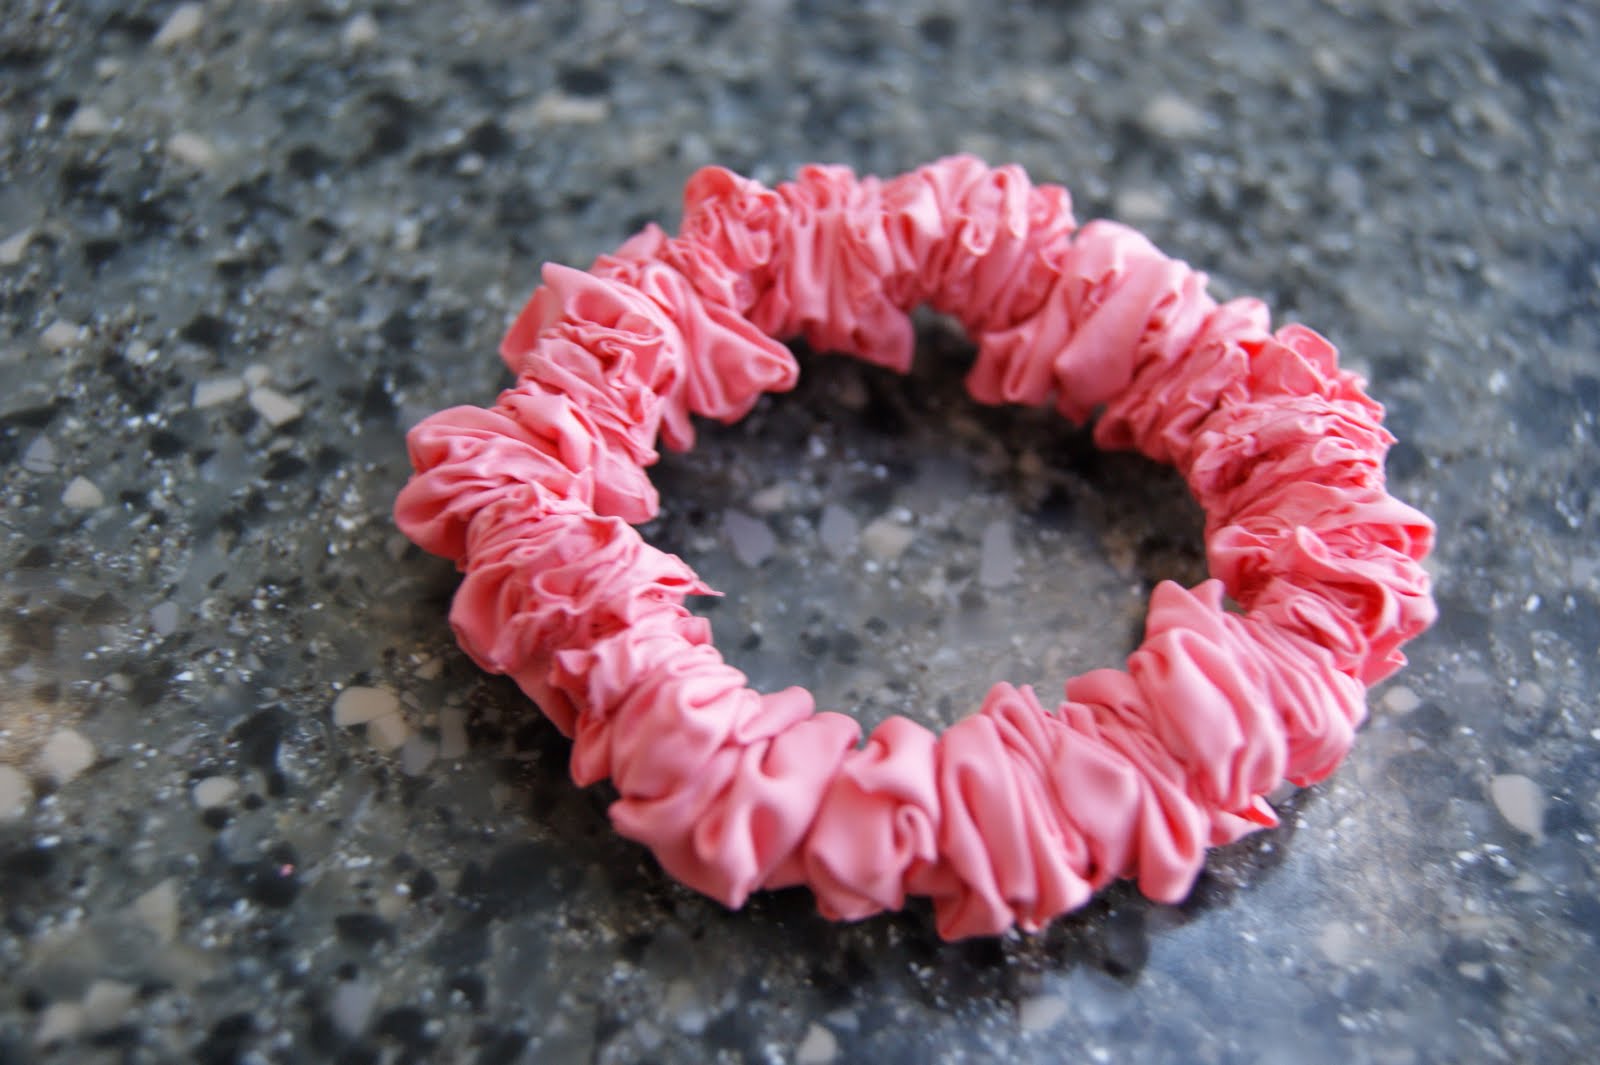 michelle paige blogs: Make Your Own Balloon Bracelets